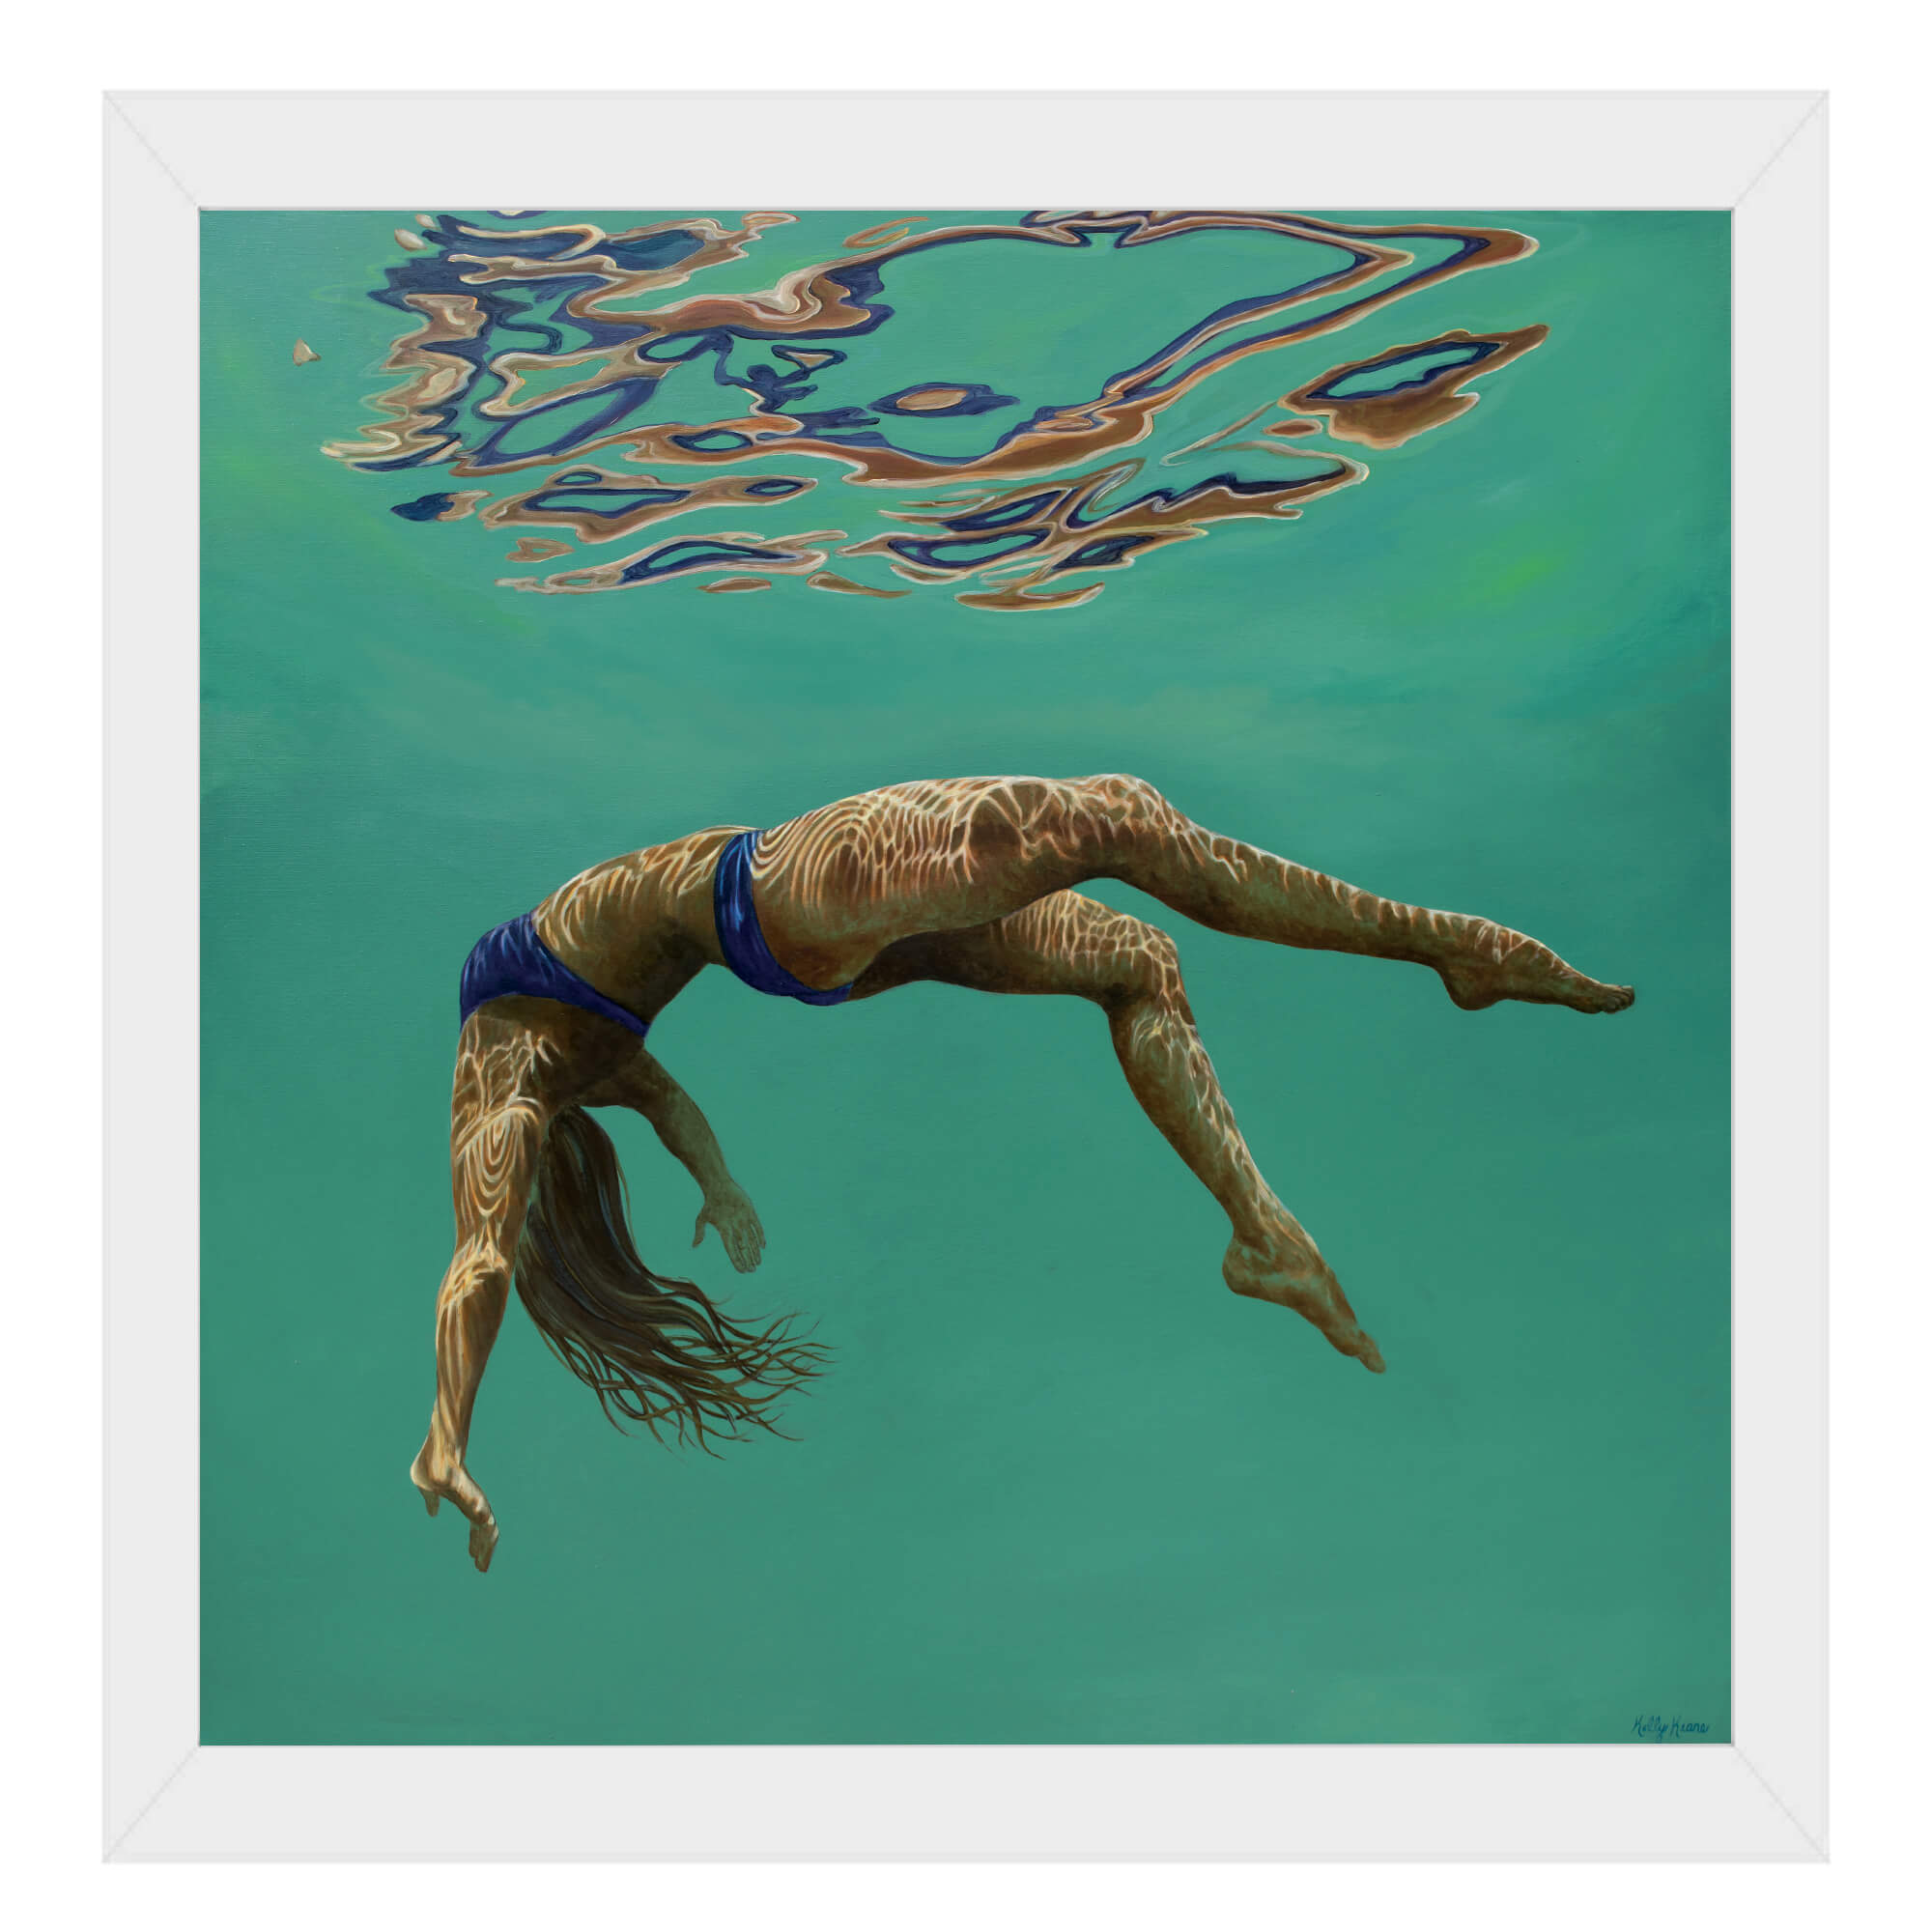 Paper art print of a woman free diving by Hawaii artist Kelly Keane